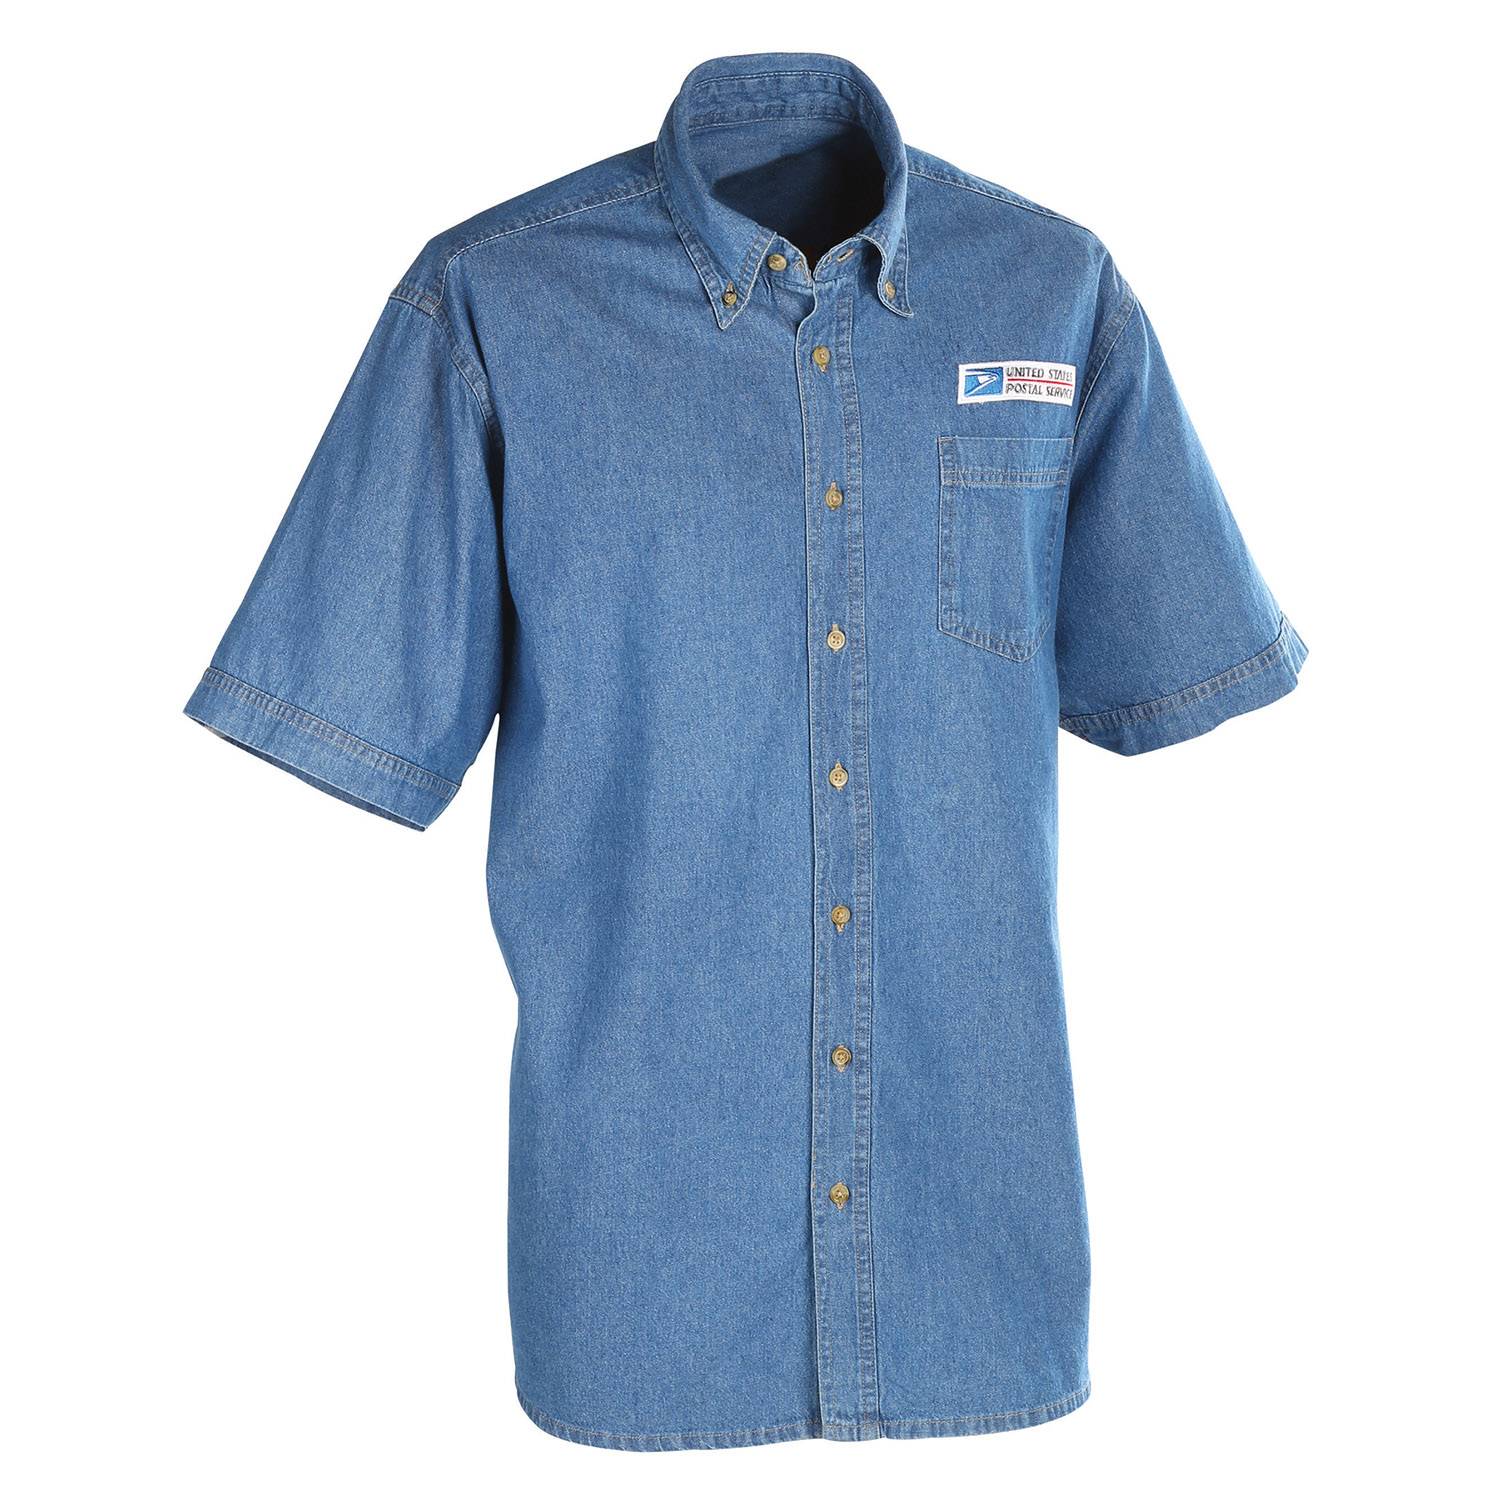 Rasco FR 88/12 Uniform Shirt - Work Blue (CLOSEOUT) | Safety Workwear